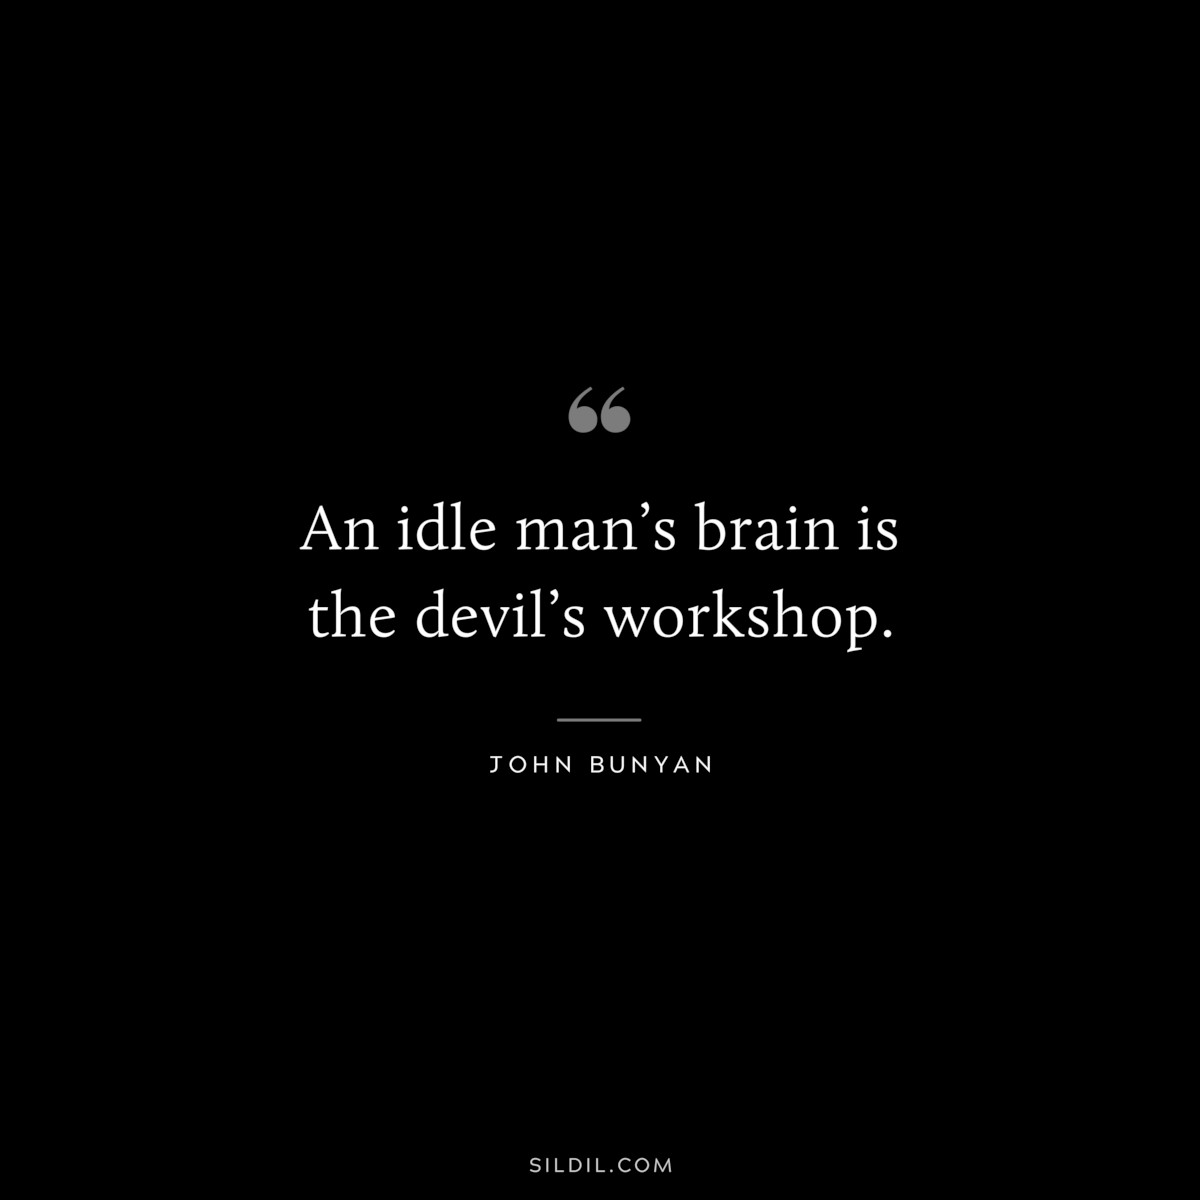 An idle man’s brain is the devil’s workshop. ― John Bunyan